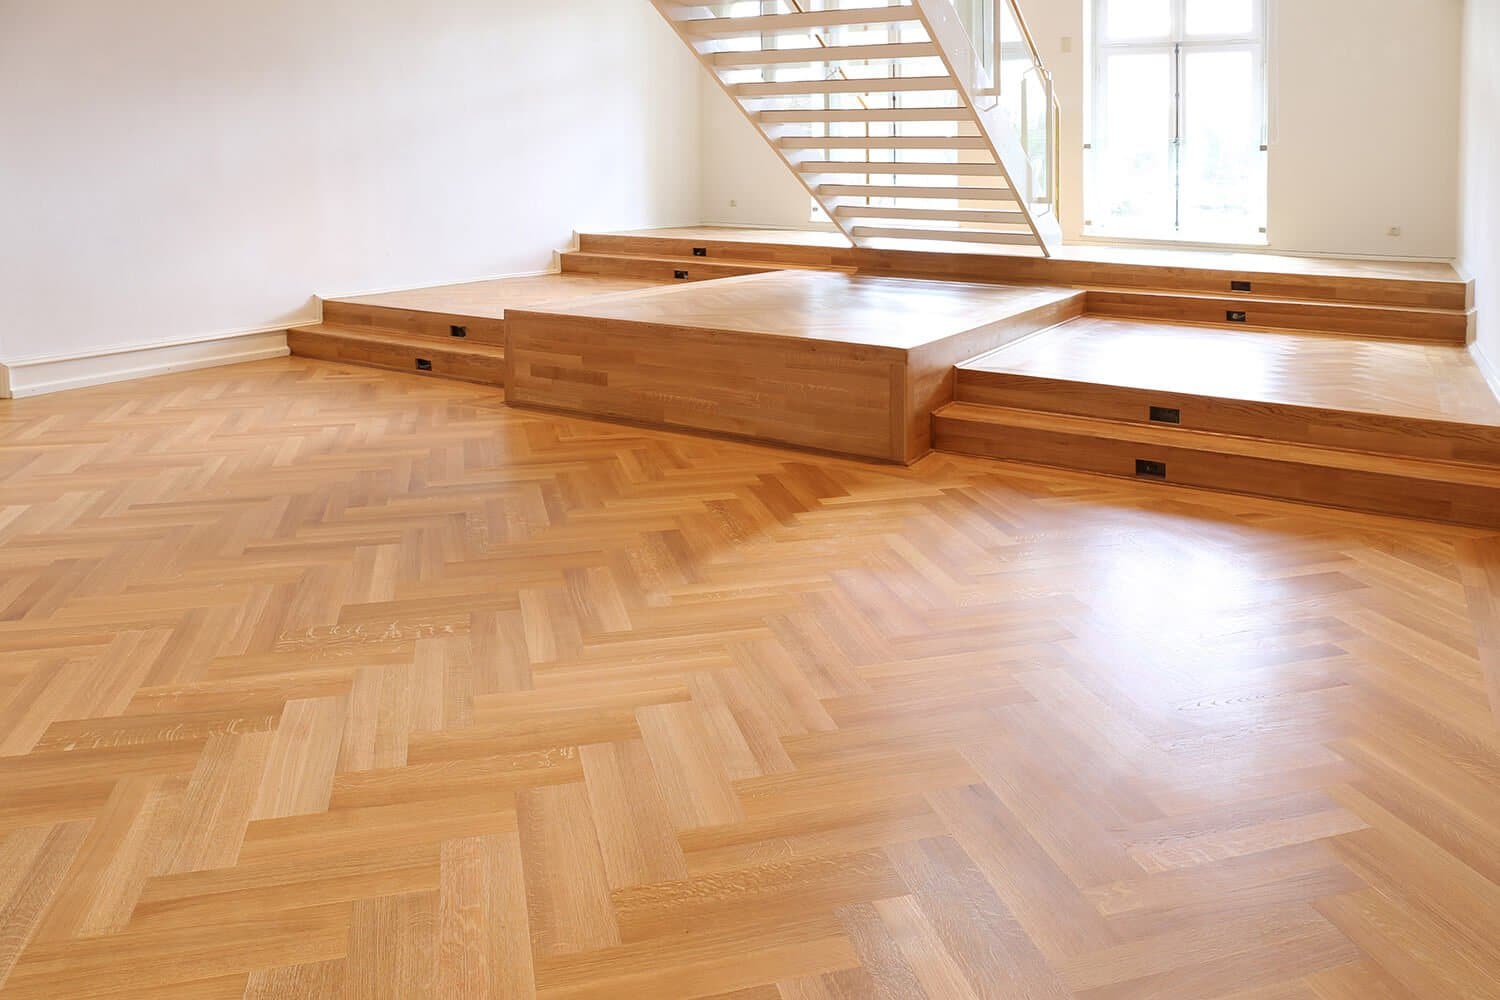 Holzboden mit Treppe in Villa Zanders